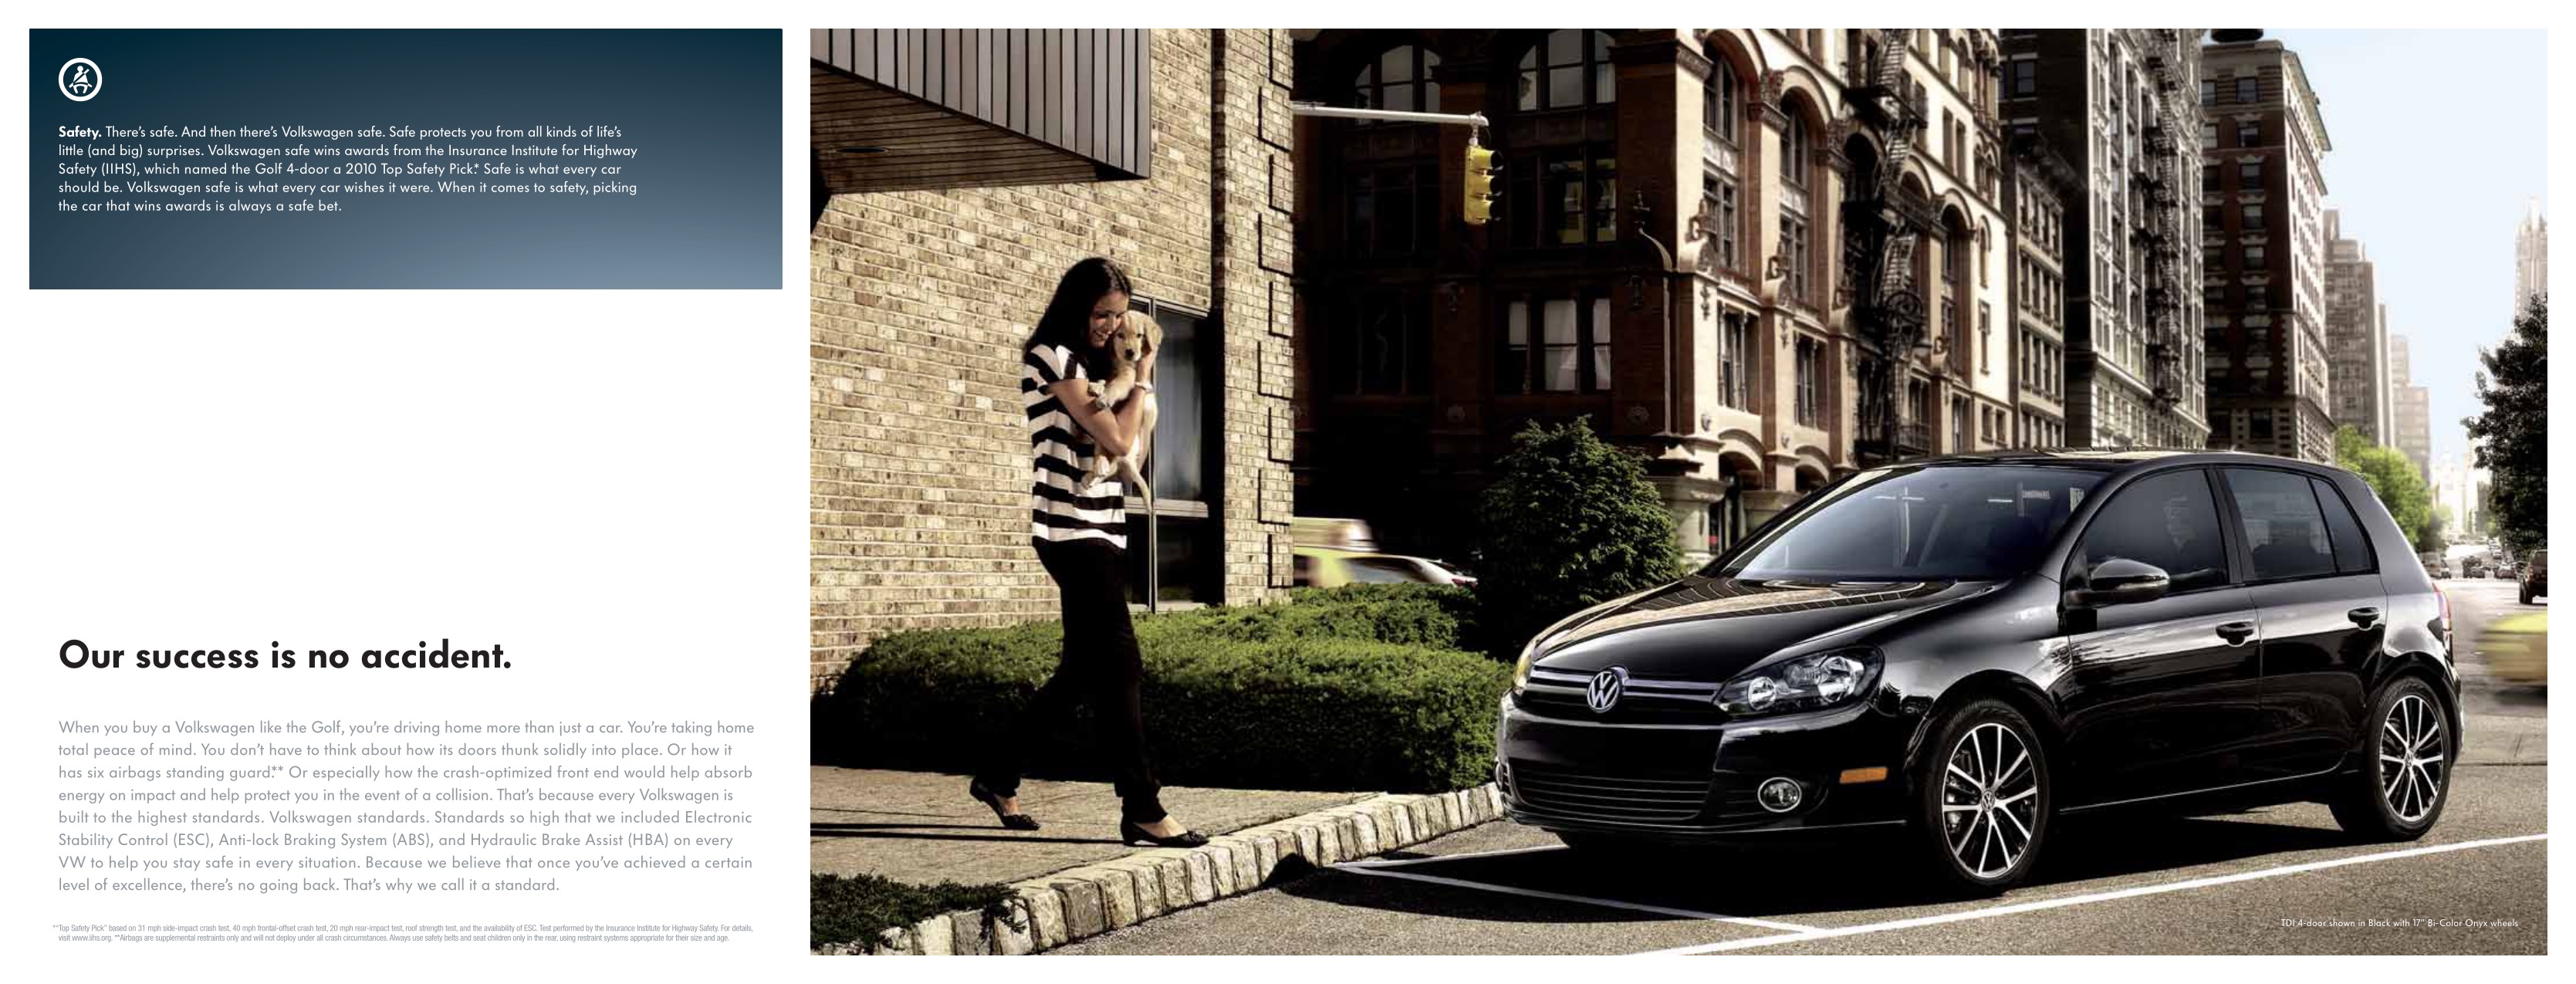 2011 VW Golf Brochure